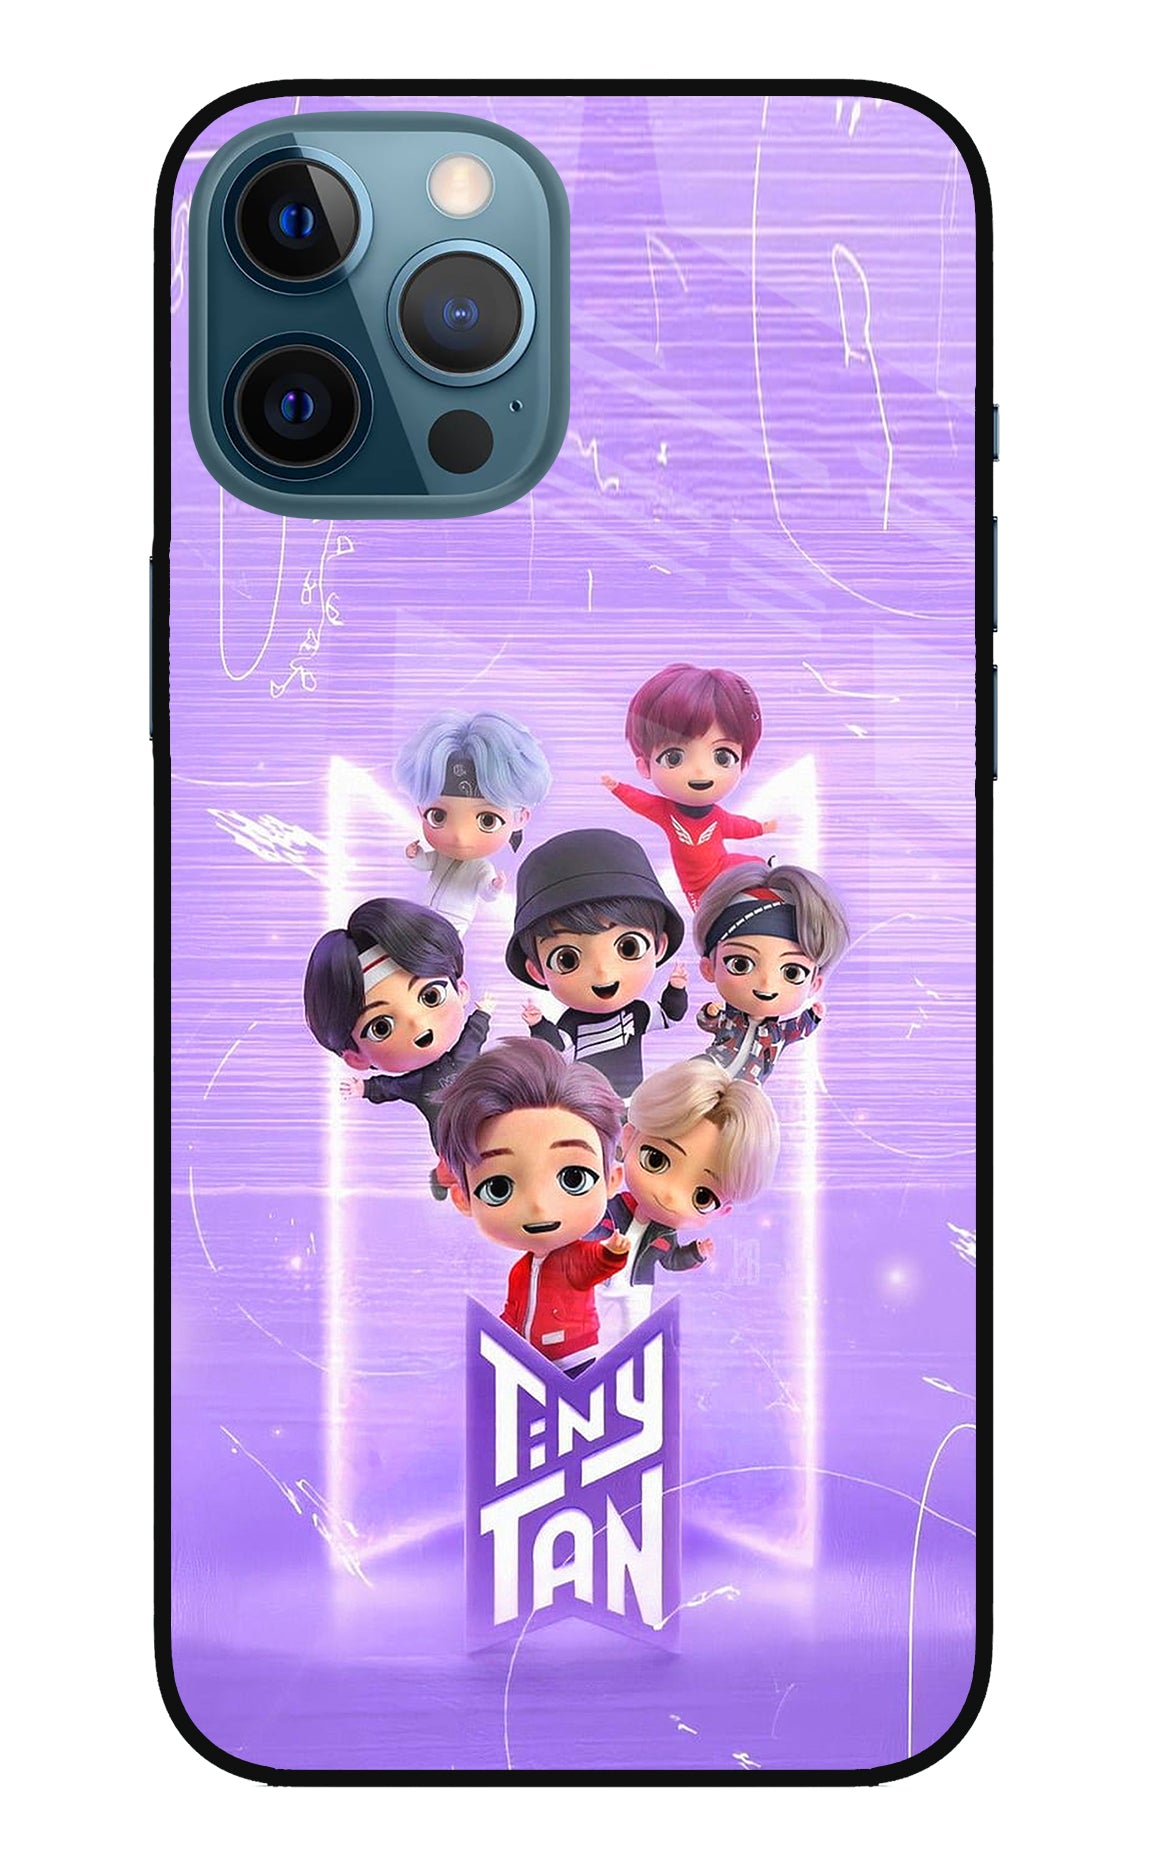 BTS Tiny Tan iPhone 12 Pro Max Glass Case